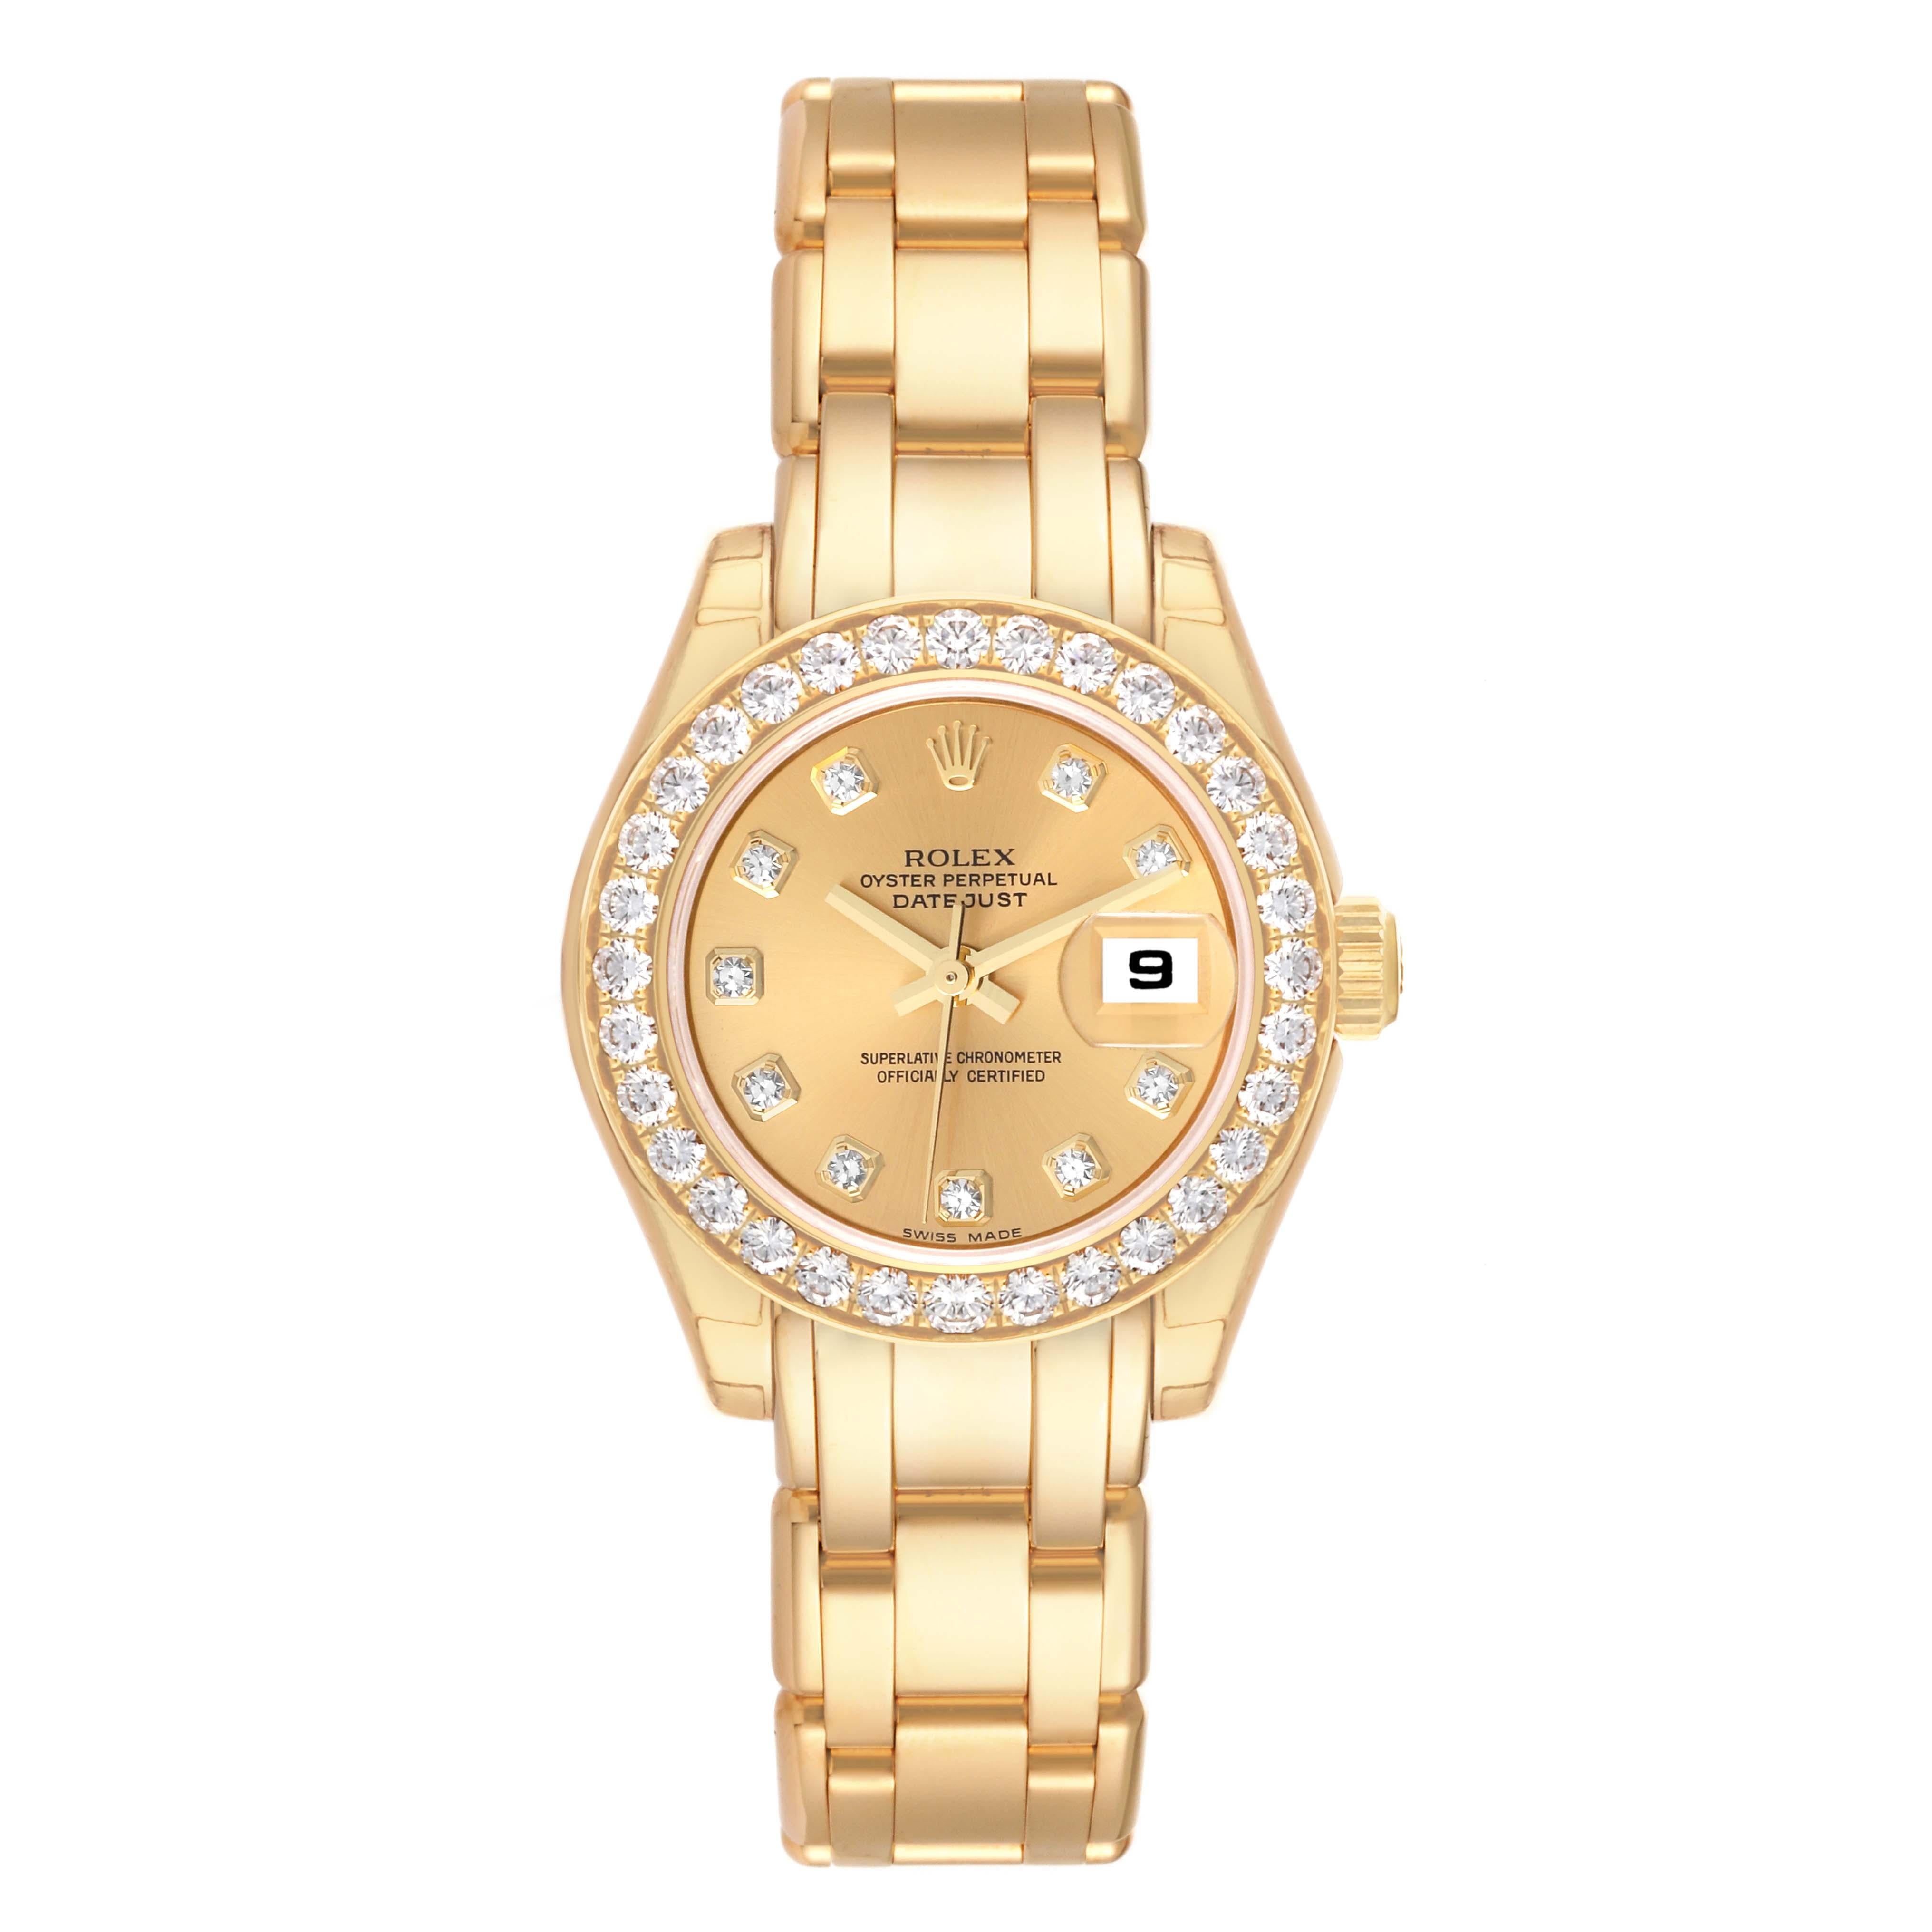 Rolex Pearlmaster Yellow Gold Diamond Ladies Watch 80298 Unworn NOS. Officially certified chronometer self-winding movement. 18k yellow gold oyster case 29.0 mm in diameter. Rolex logo on a crown. Original Rolex factory diamond bezel. Scratch